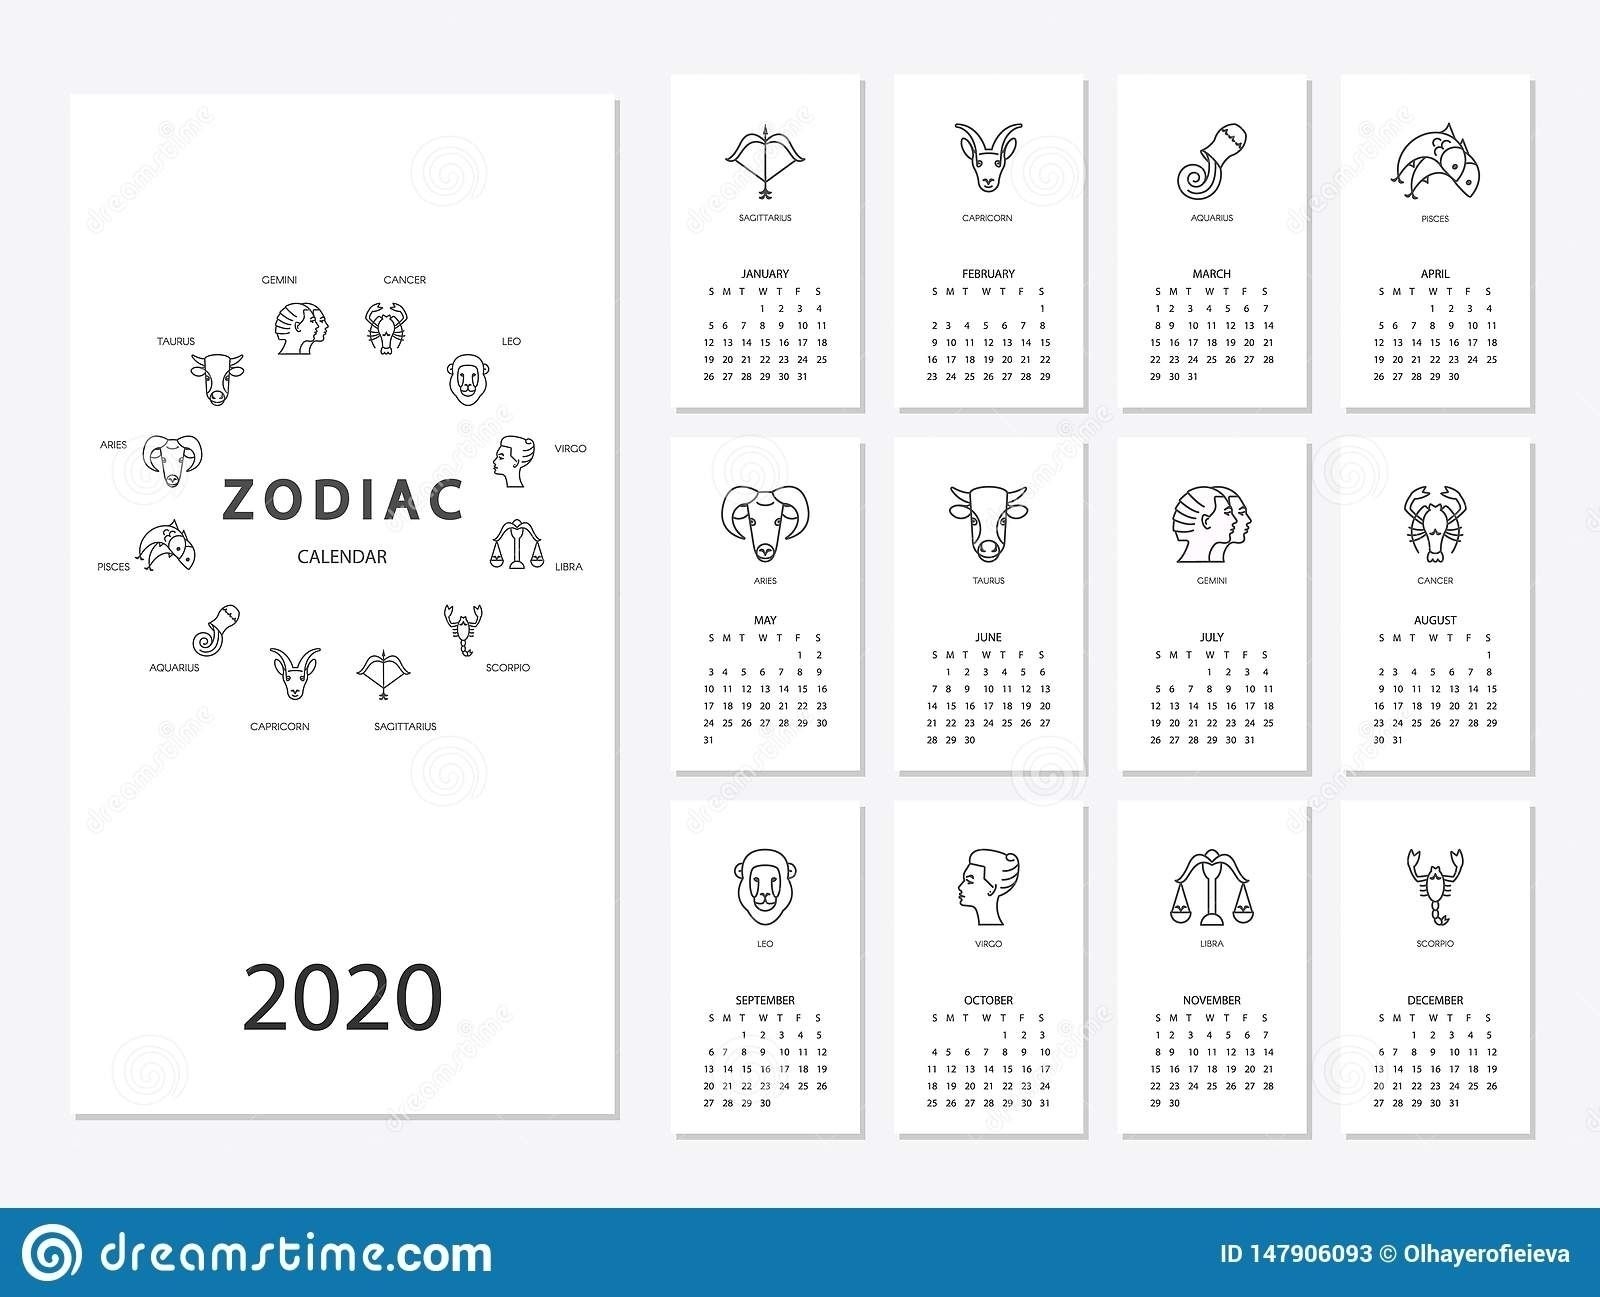 Calendar 2020 Zodiac | Zodiac Calendar, Zodiac Signs Zodiac Calendar 13 Signs